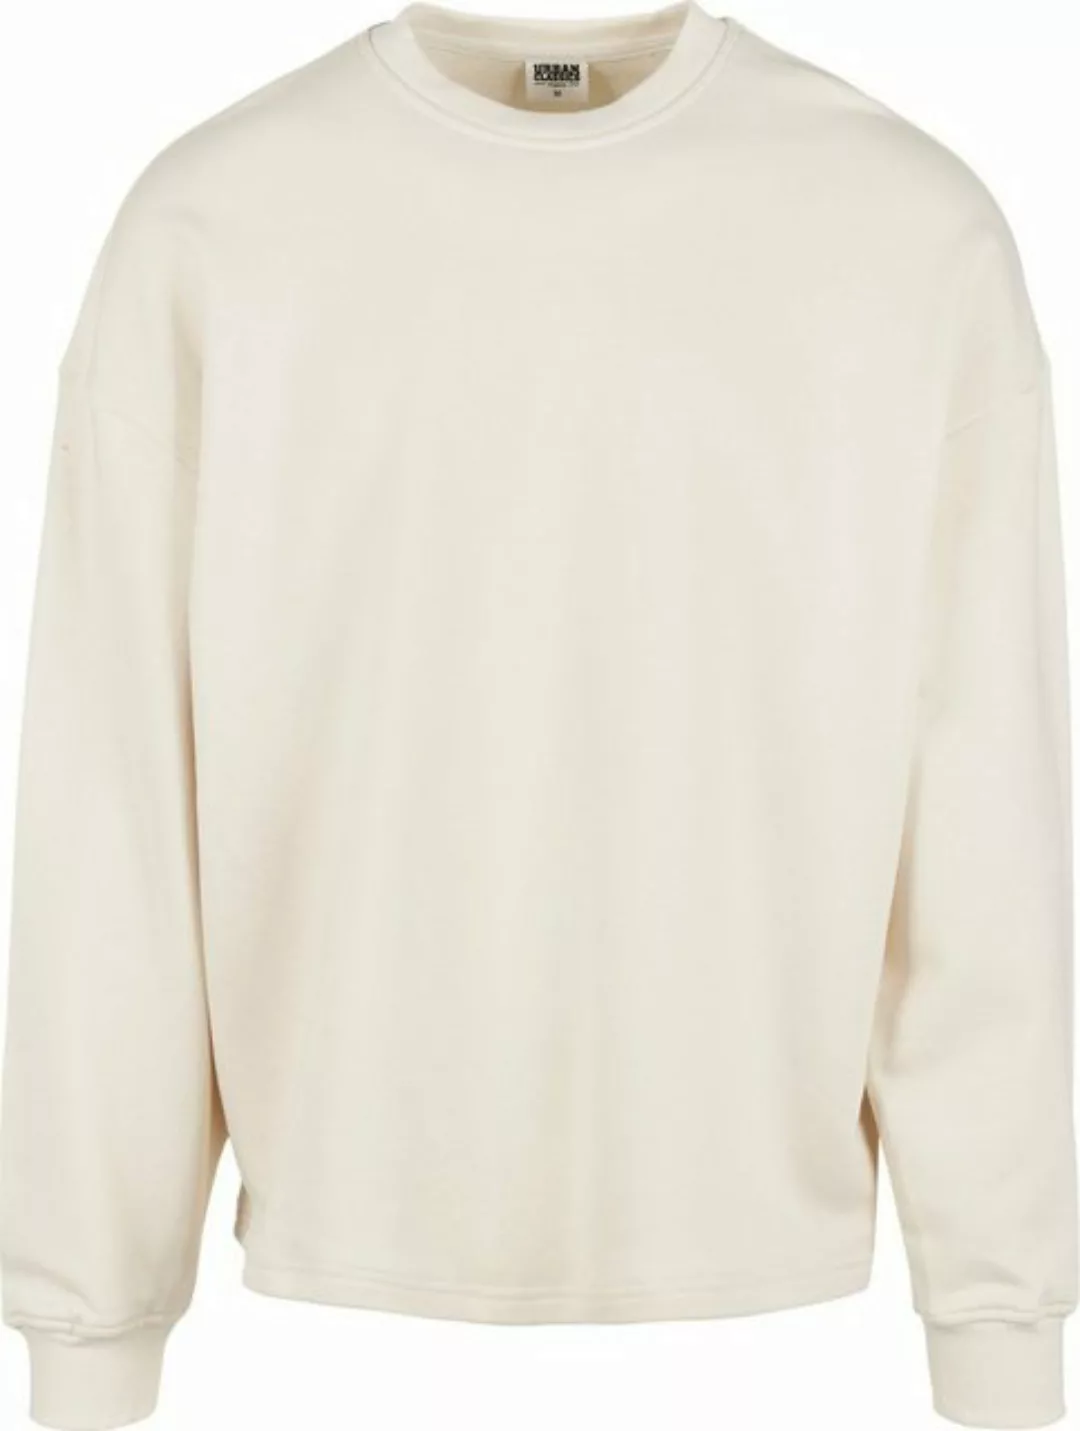 URBAN CLASSICS Sweatshirt "Urban Classics Herren Overdyed Hoody" günstig online kaufen